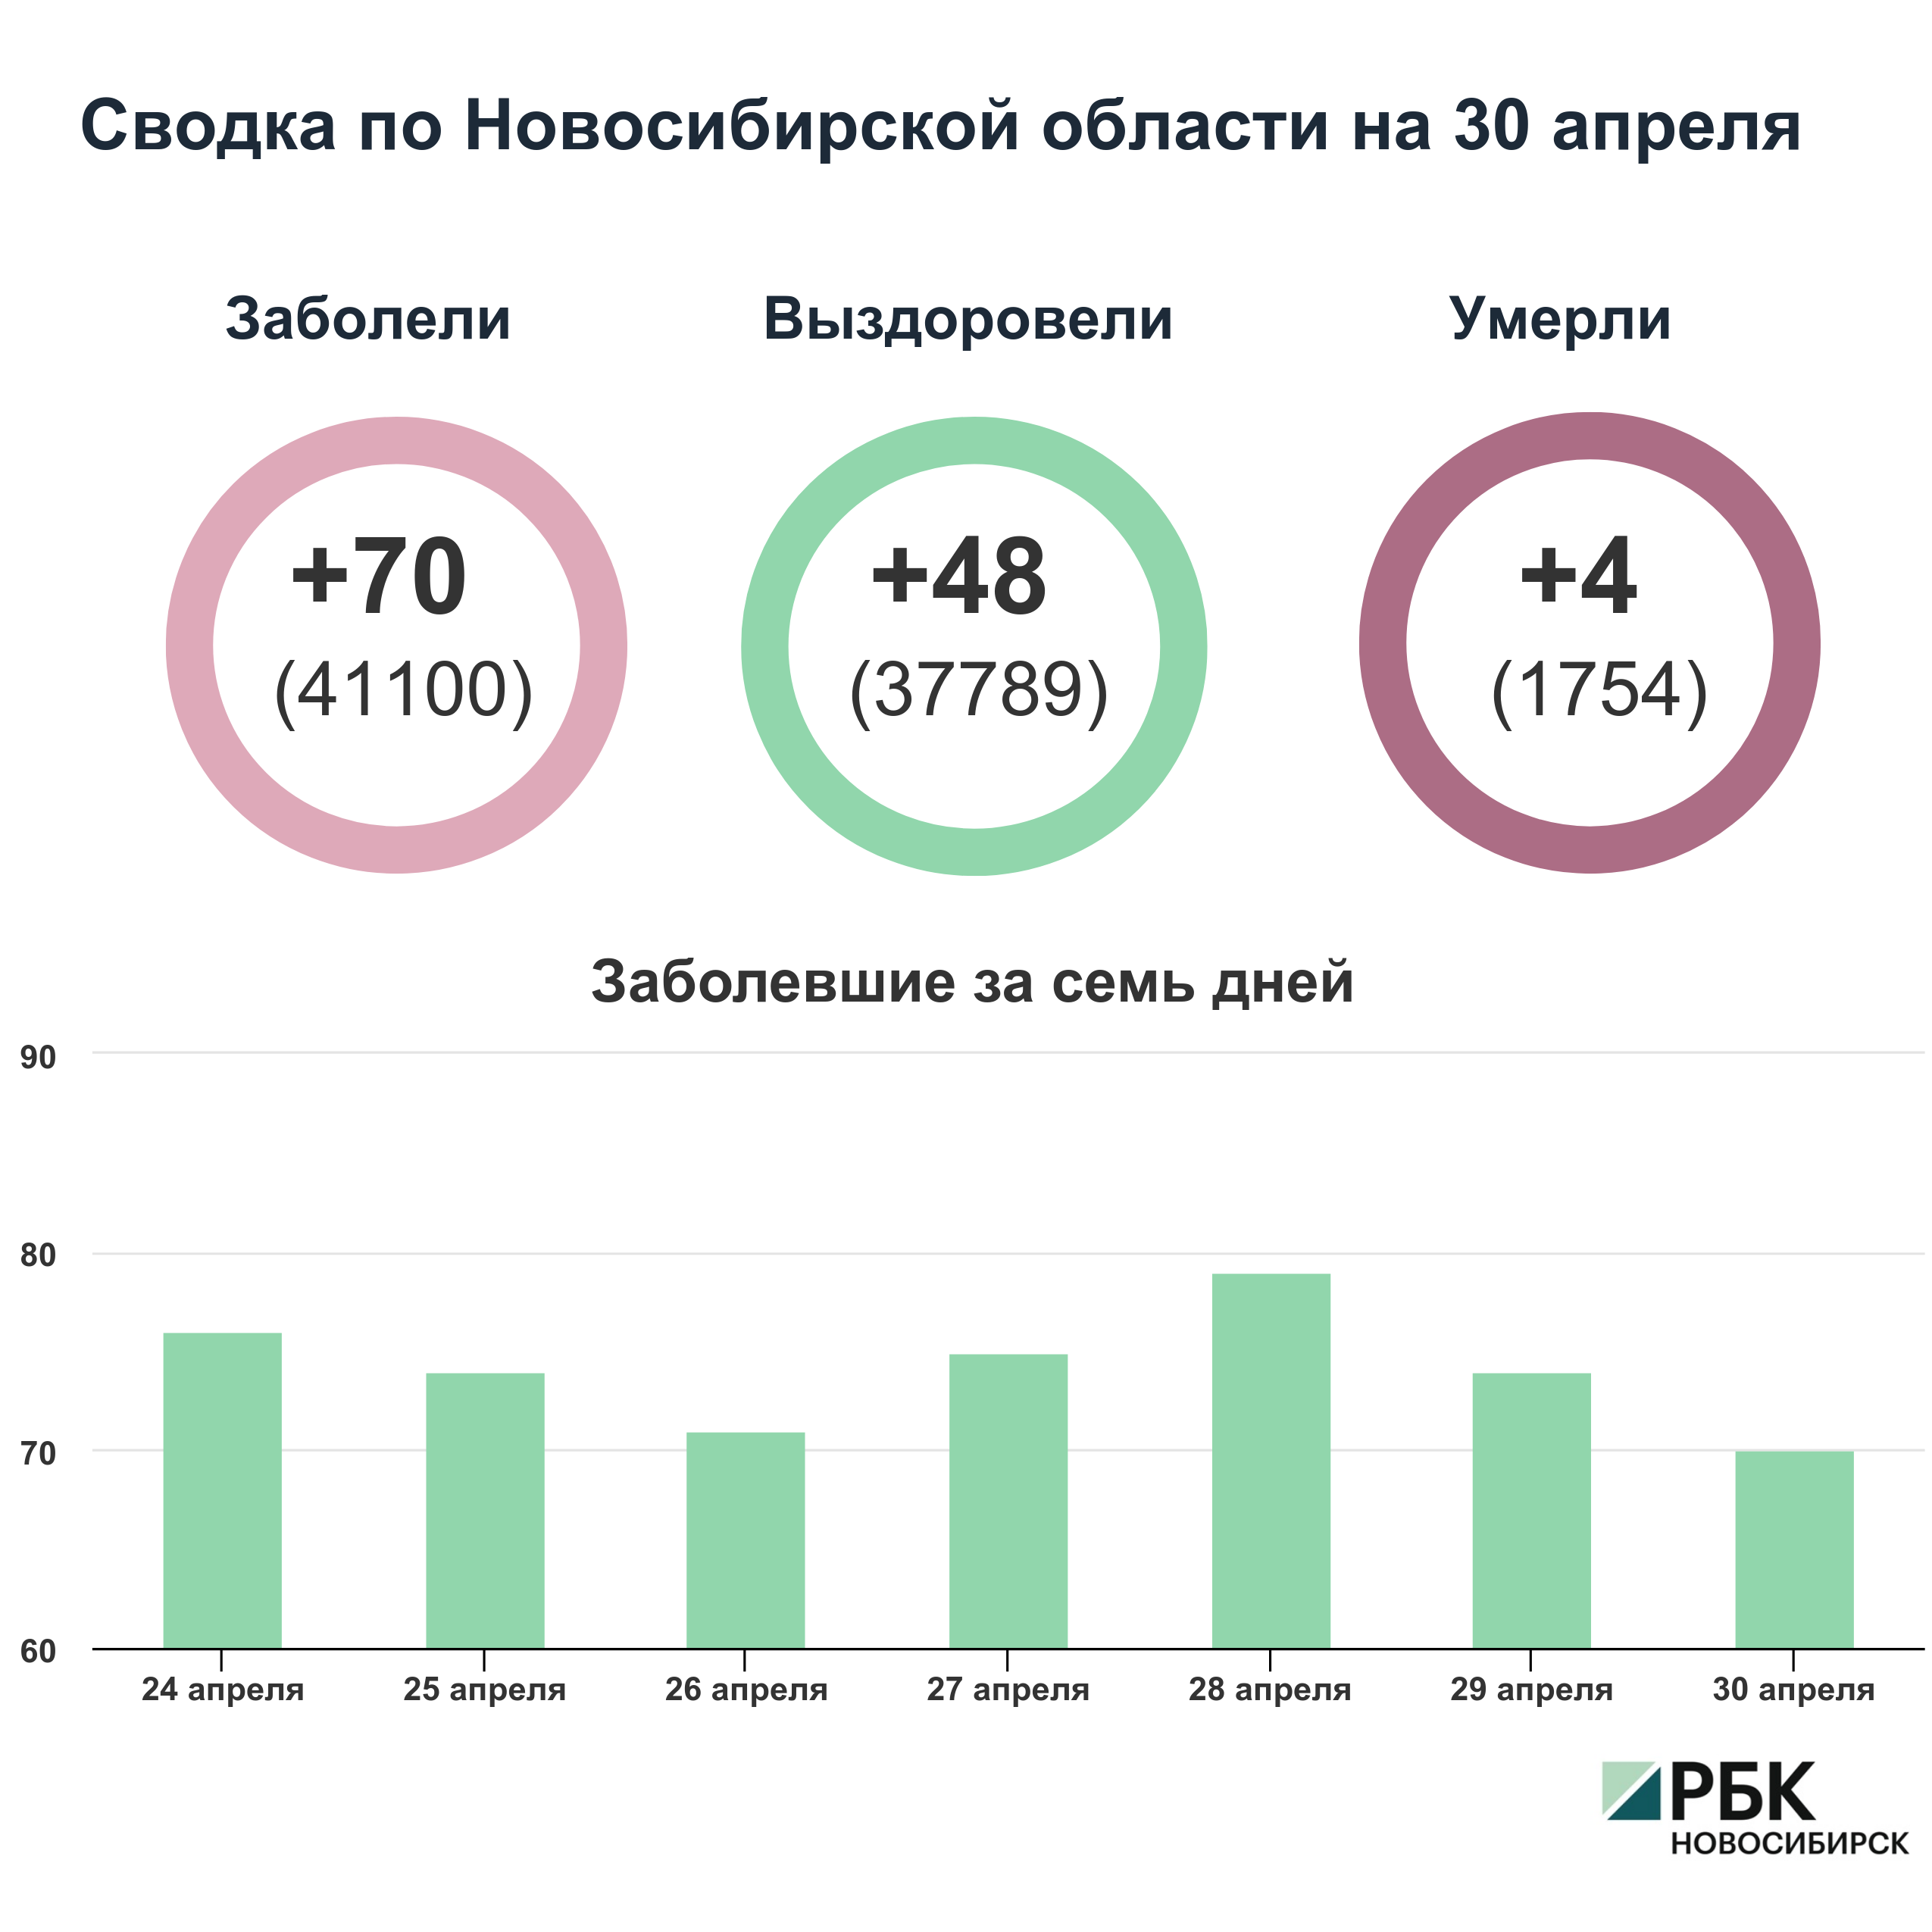 Коронавирус в Новосибирске: сводка на 30 апреля